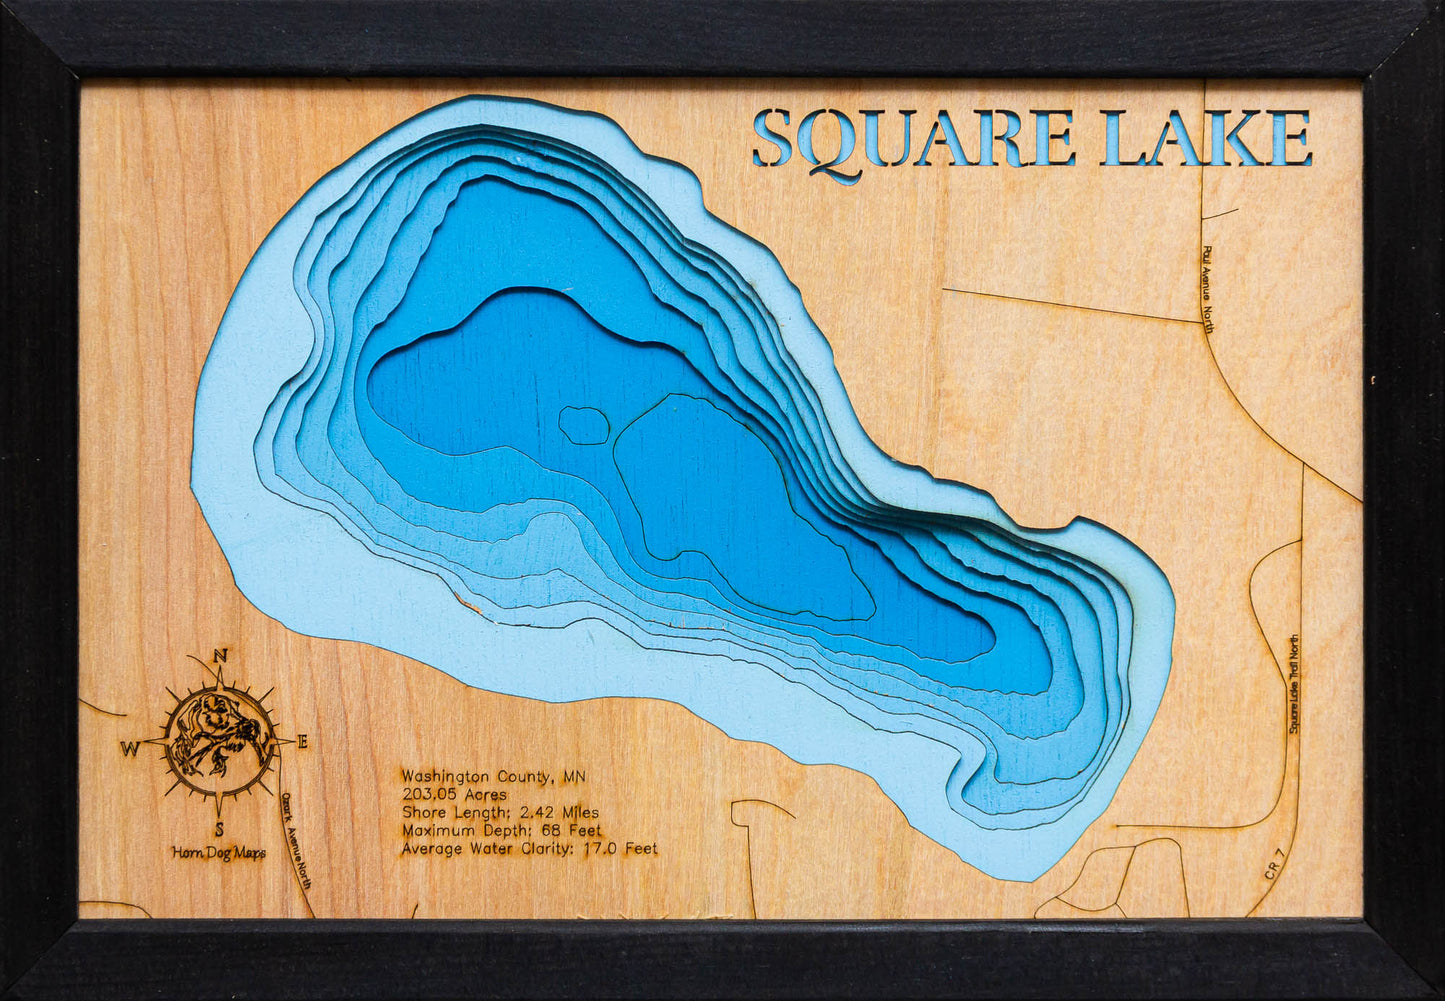 Square Lake in Washington County, MN